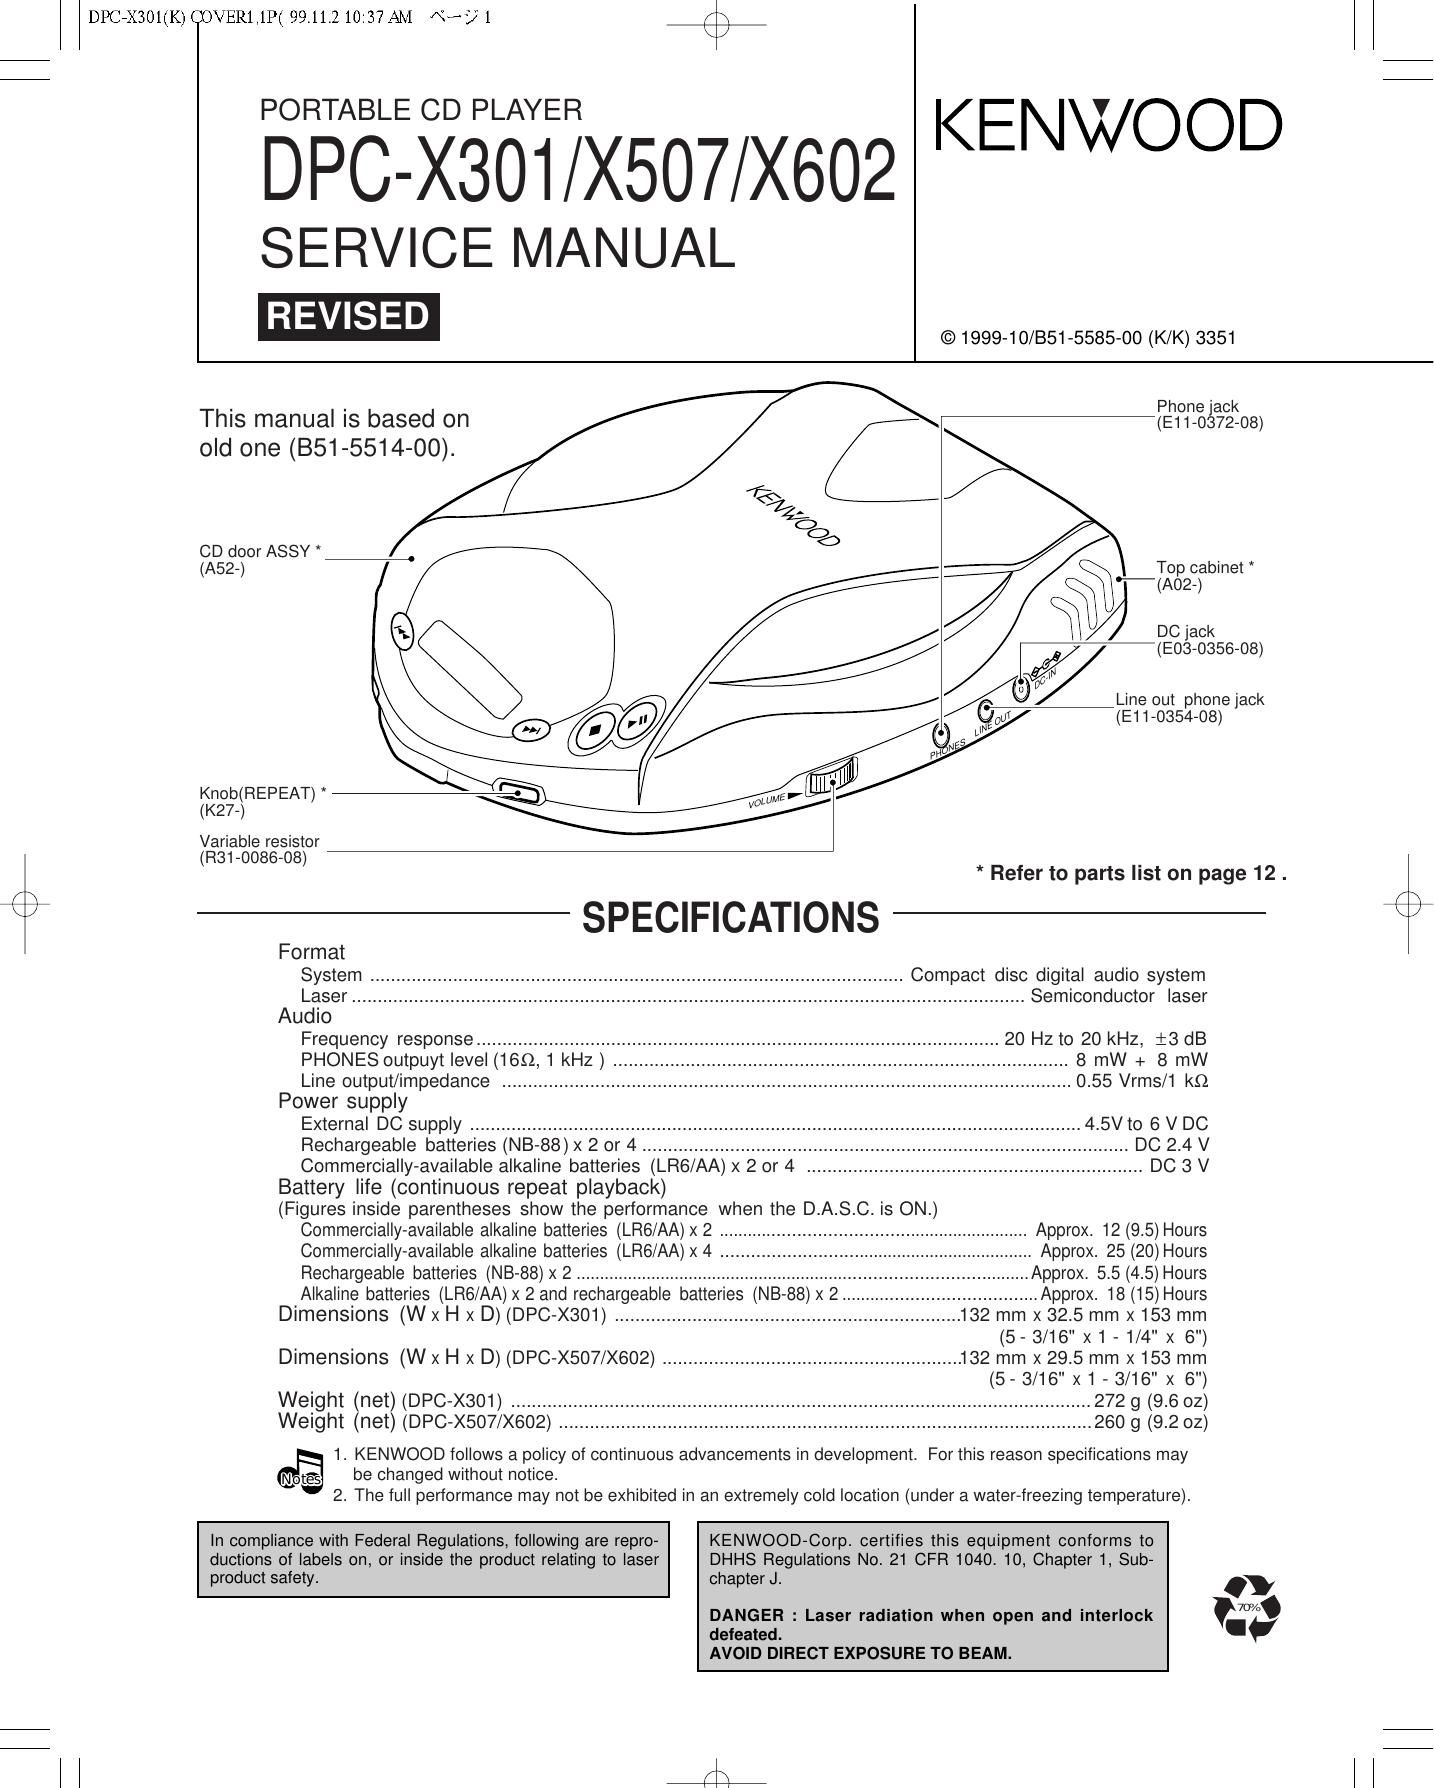 Kenwood DPCX 301 Service Manual